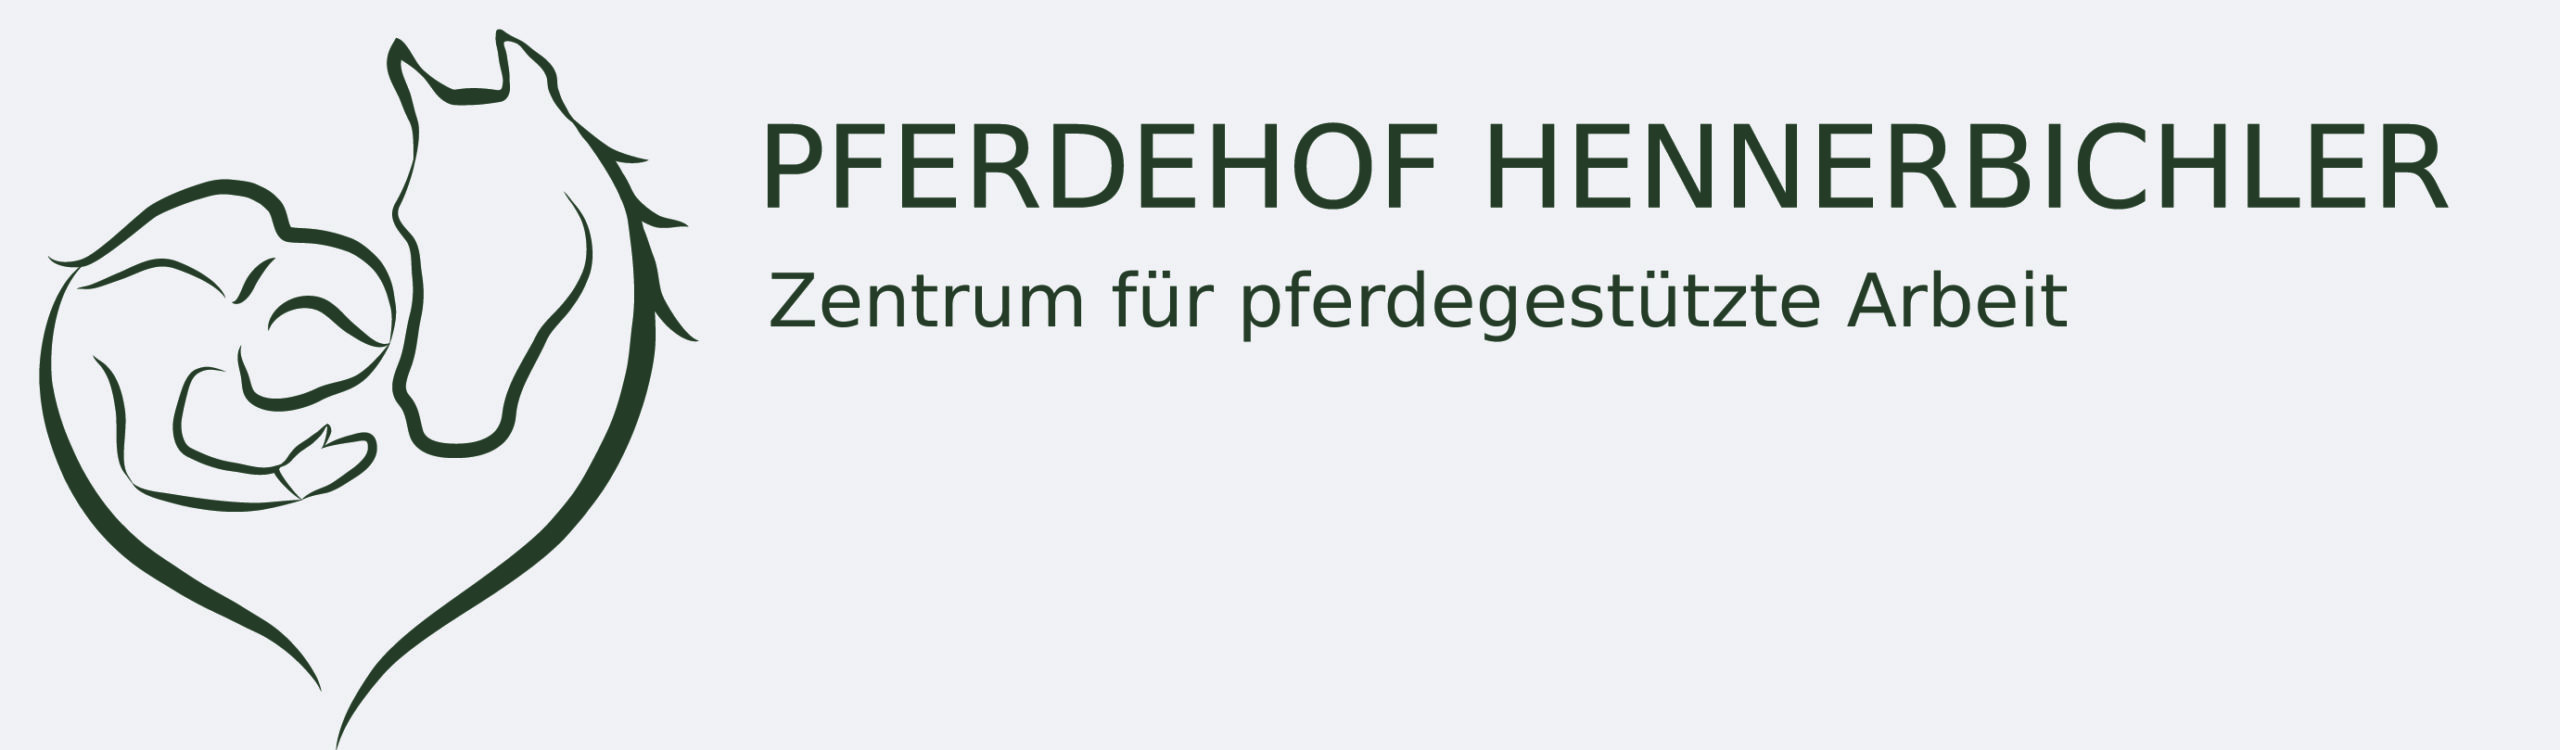 Pferdehof Hennerbichler Logo